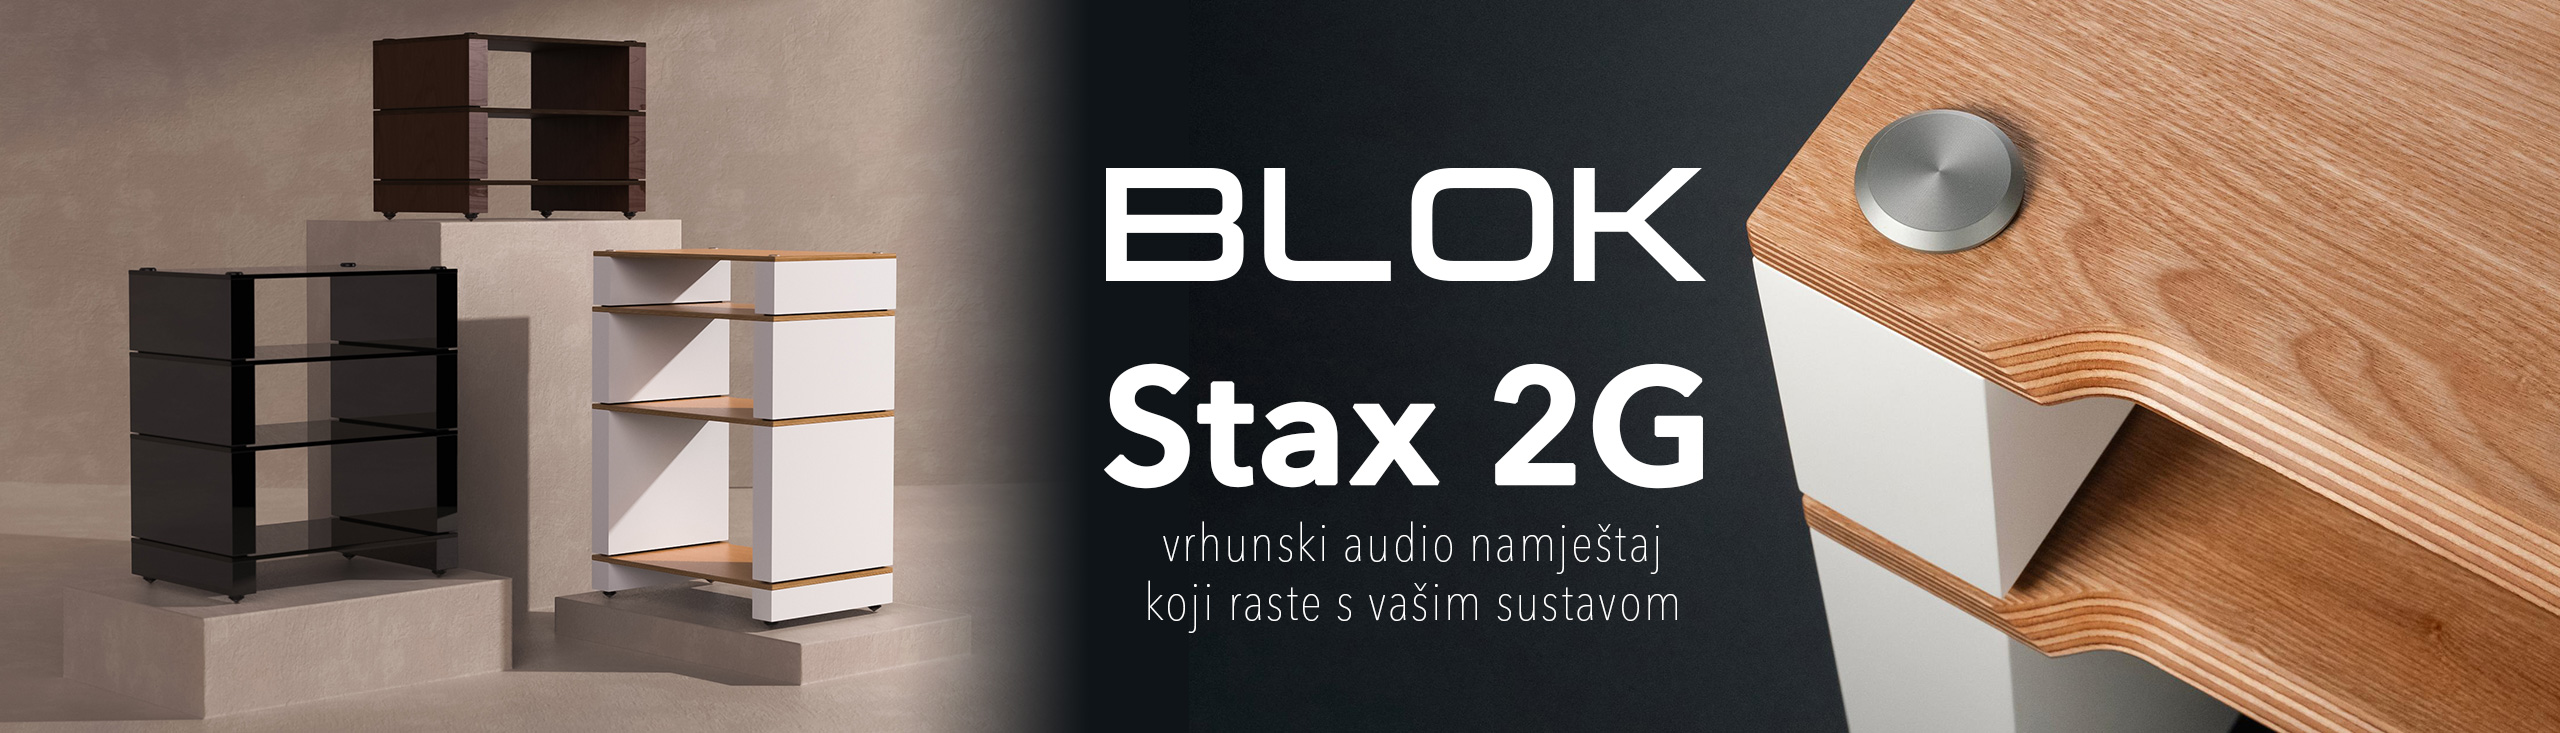 BLOK Stax 2G police